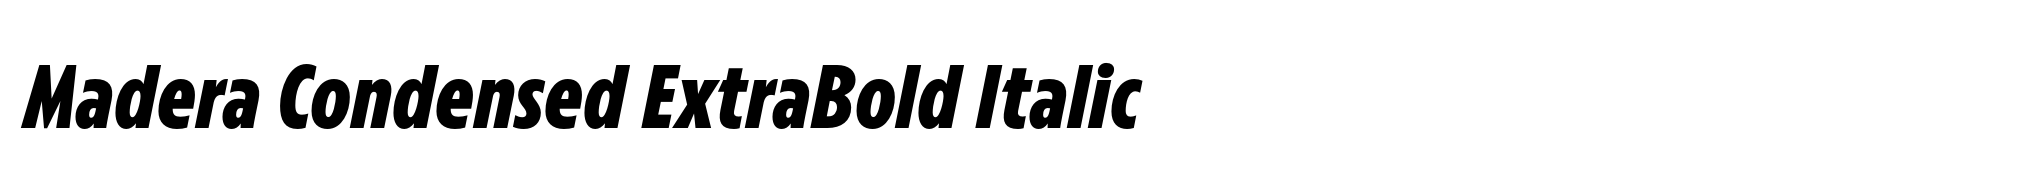 Madera Condensed ExtraBold Italic image